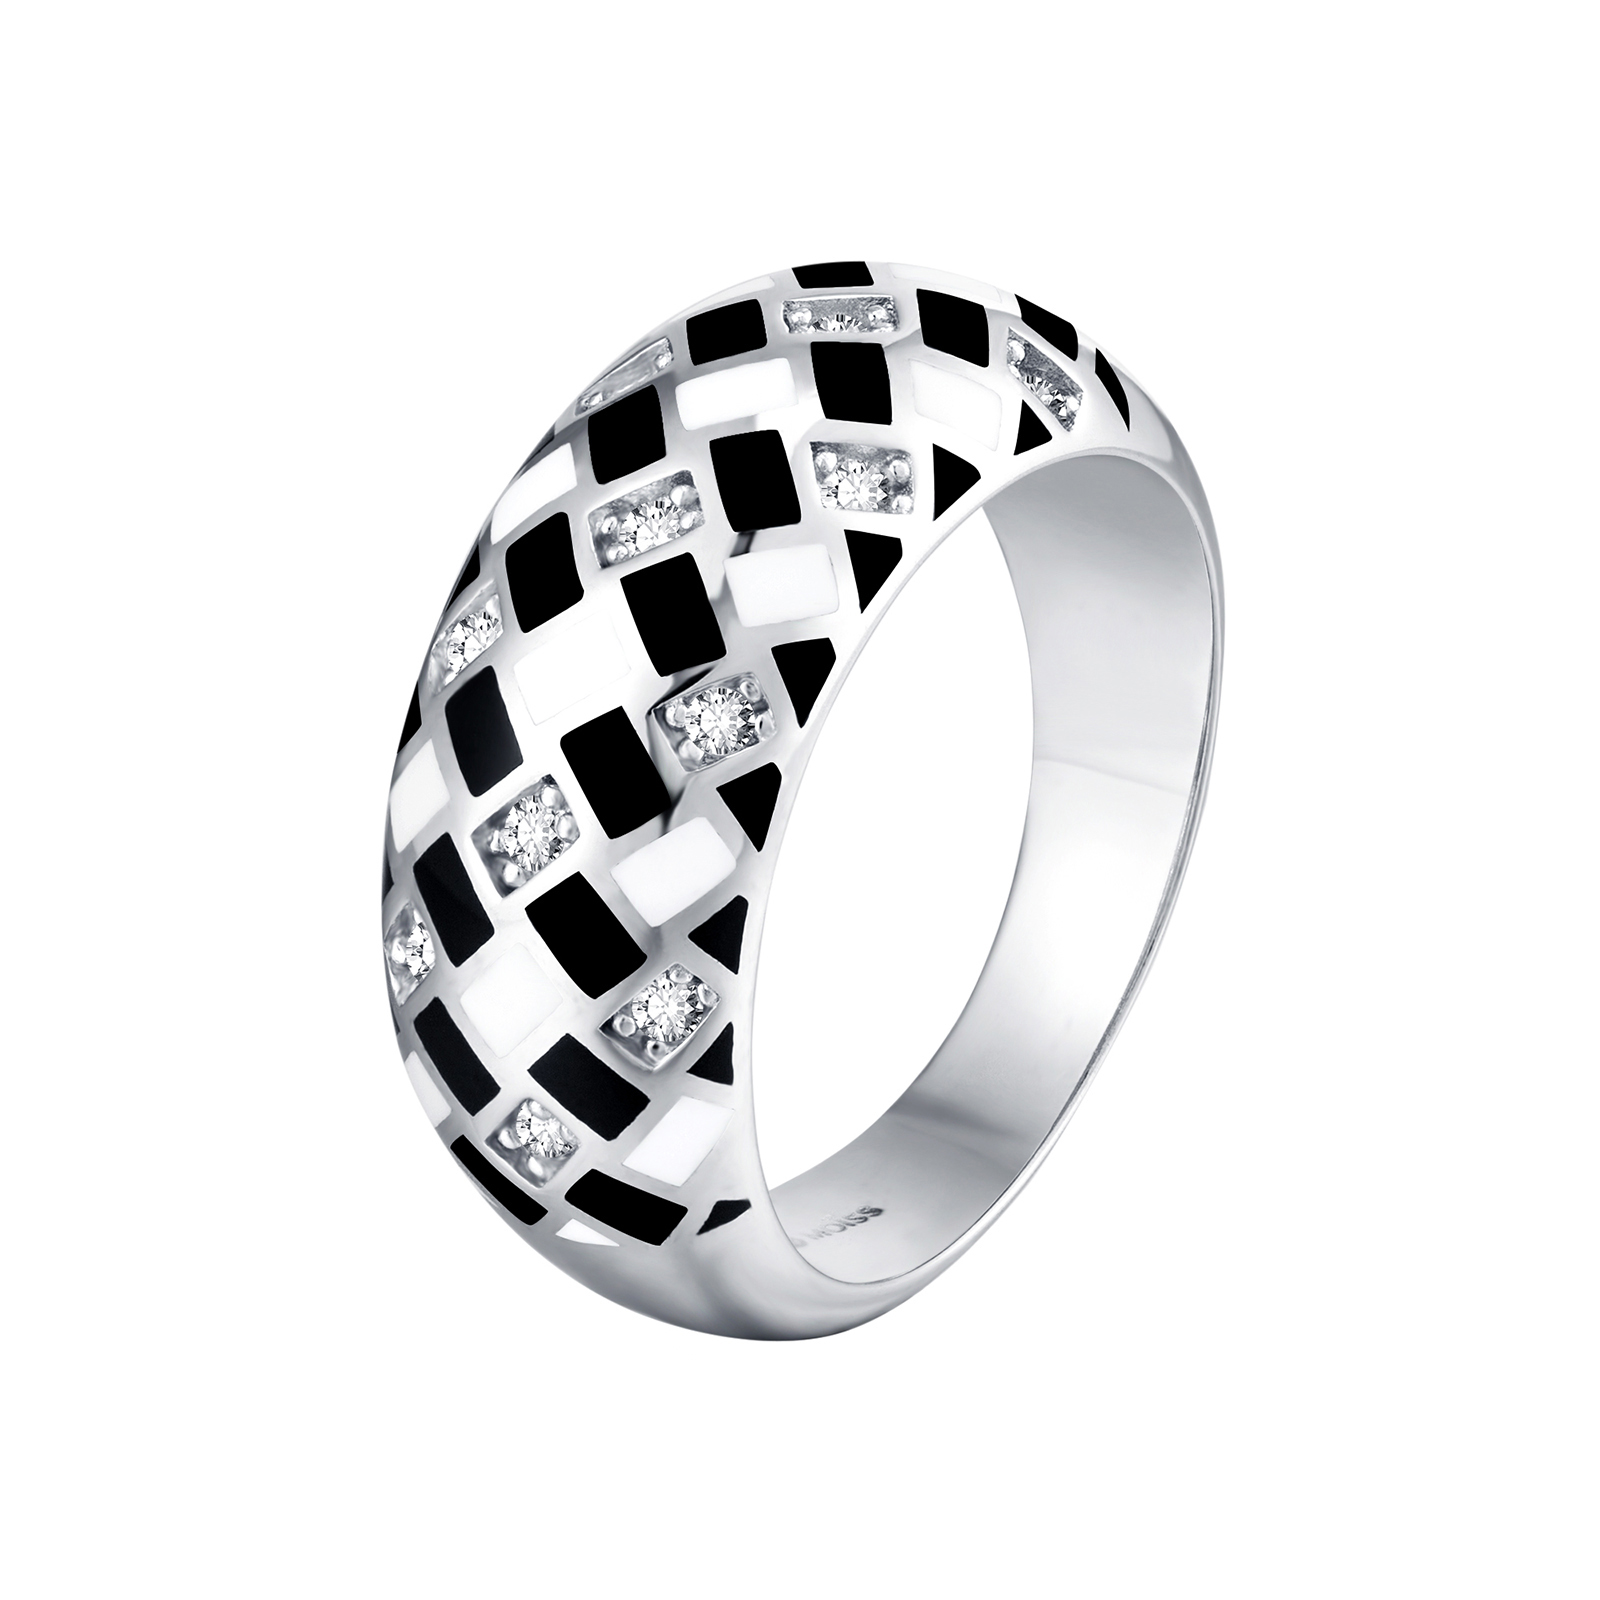 MOISS Moiss stříbrný prsten MIROSLAVA smalt R0002226 Velikost 56 mm R0002226